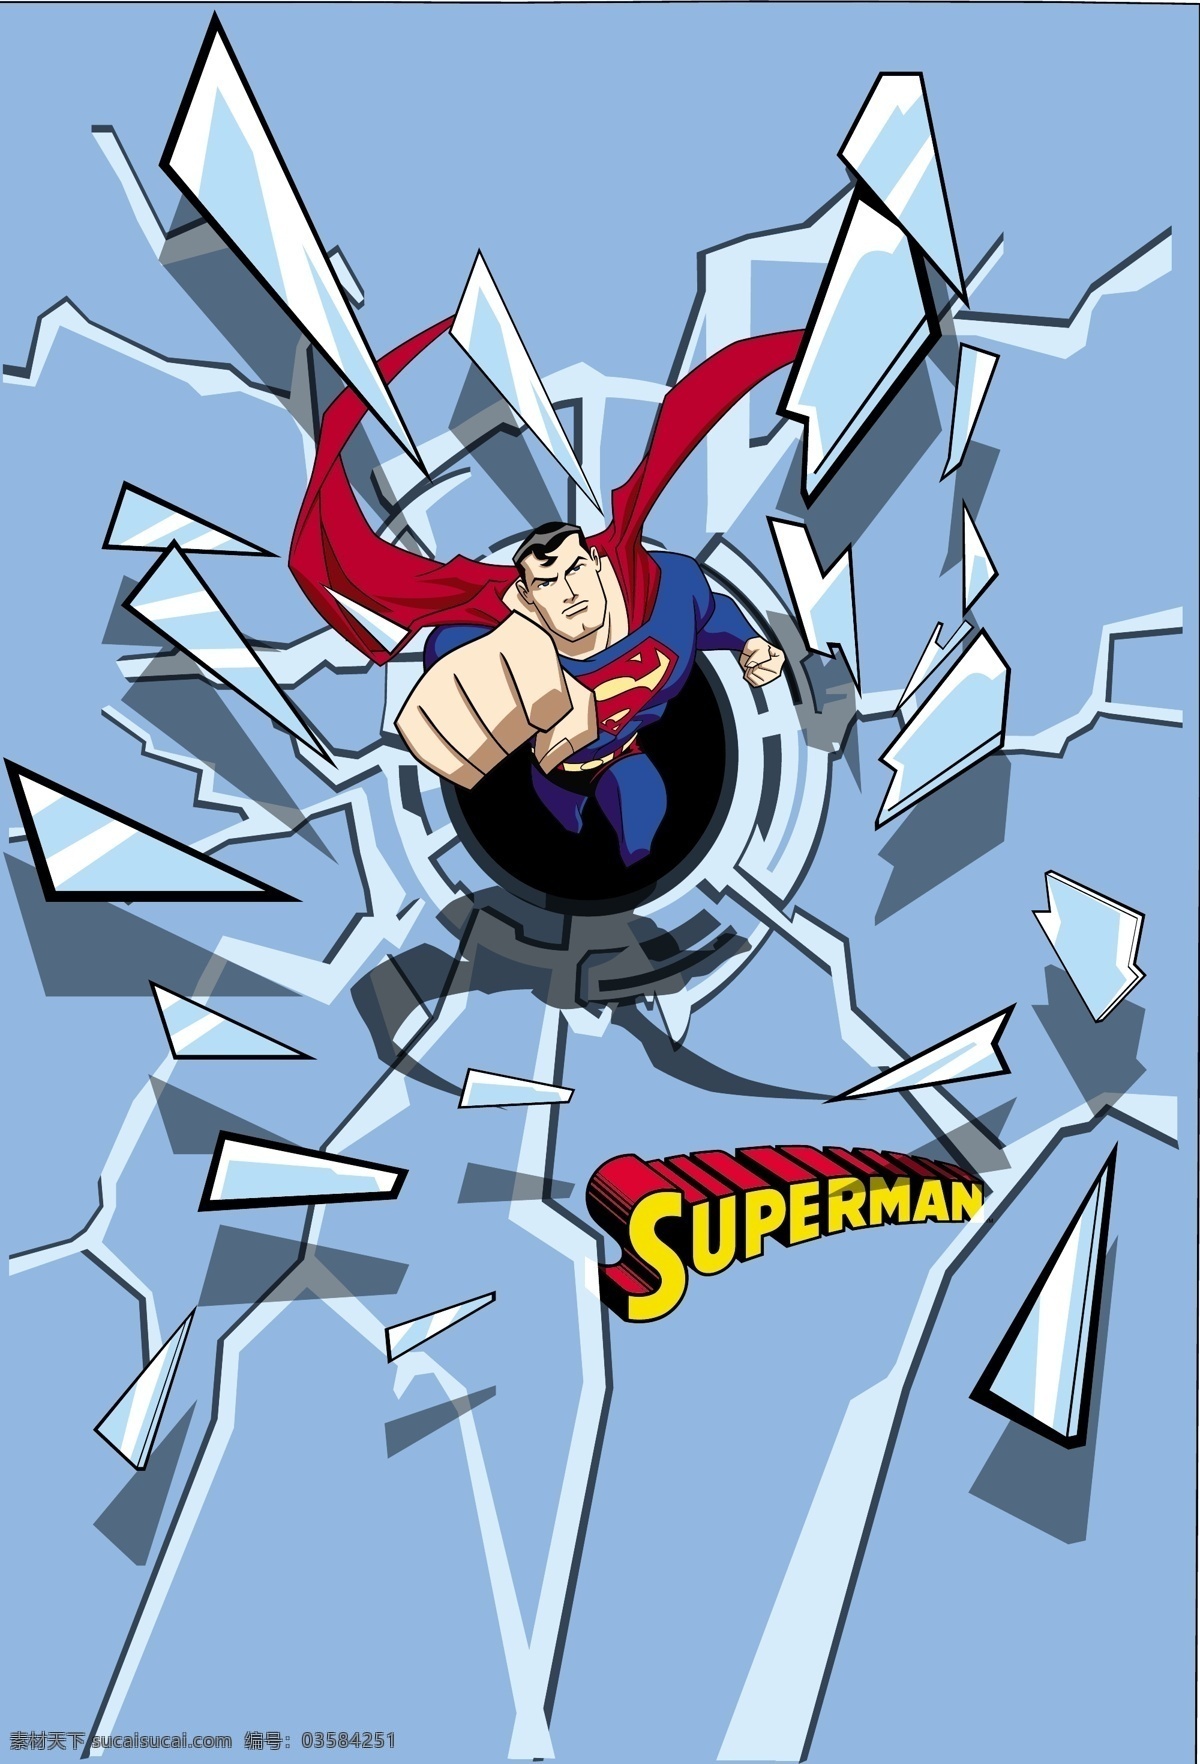 flash superman 蝙蝠侠 超人 卡通形象 其他人物 矢量人物 英雄联盟 超人矢量素材 超人模板下载 batman 闪电侠 华纳 dc漫画 超级英雄 矢量 超人英雄 网页素材